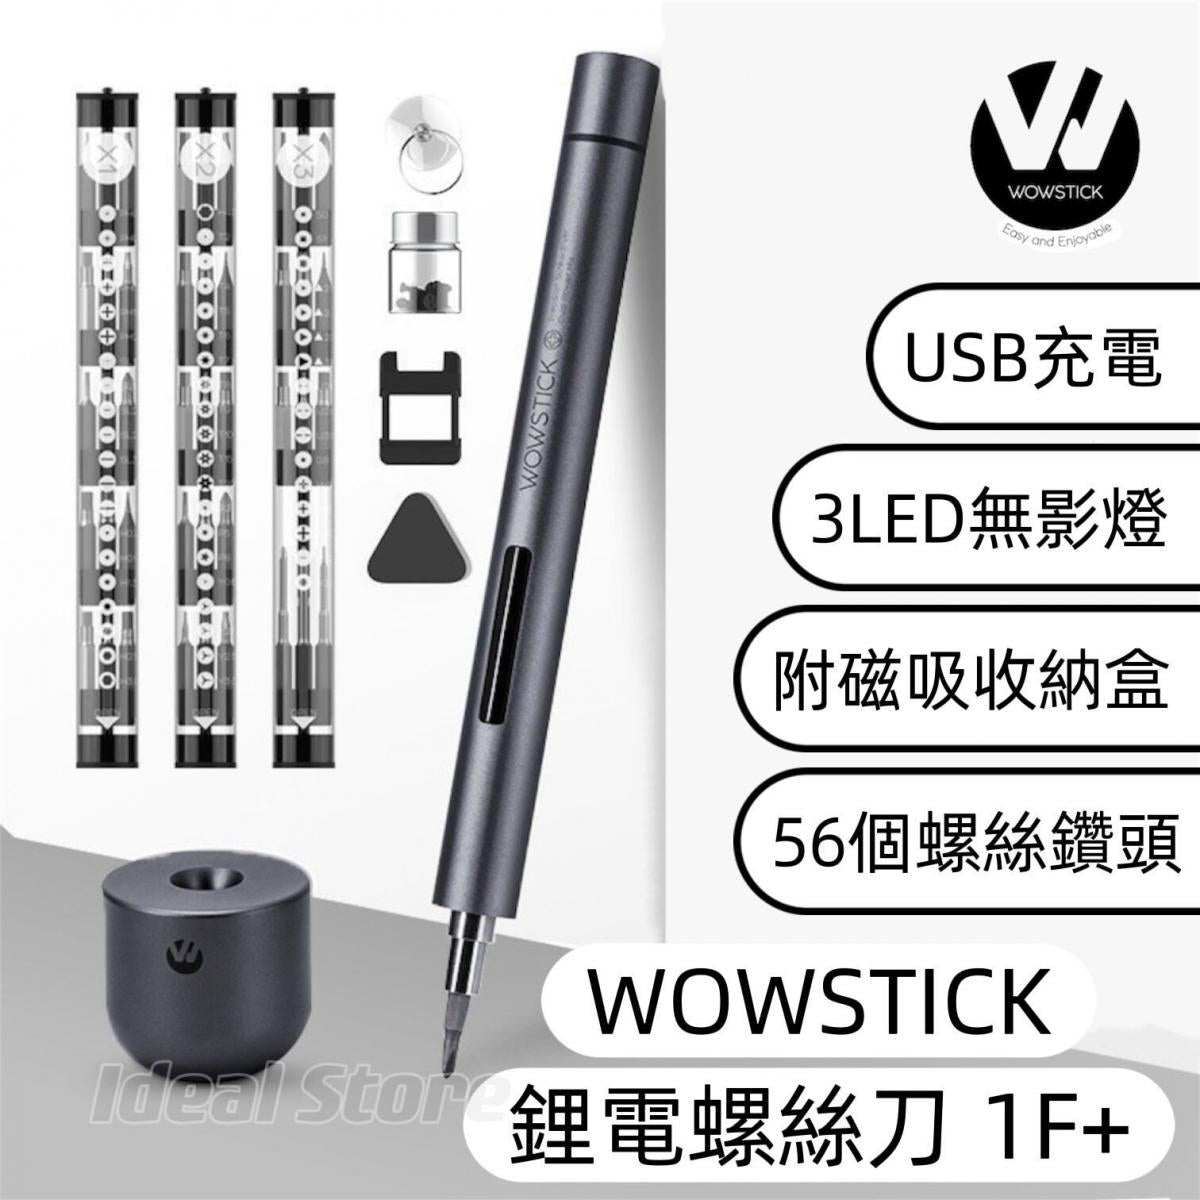 Wowstick - 1F+ 電動螺絲批｜充電式｜起子電批｜鋰電池精密螺絲刀｜電批